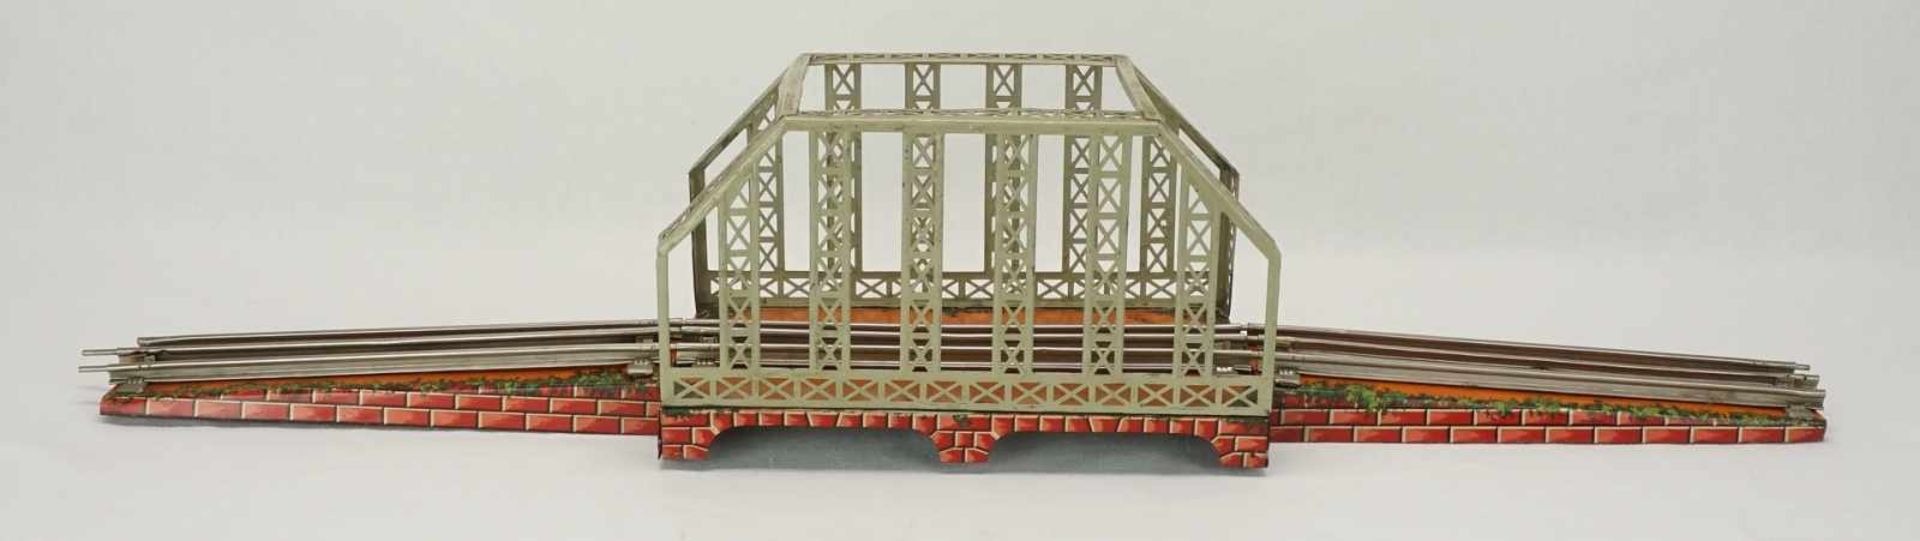 Bing Gittermast Brücke, Spur 0, 1. Hälfte 20. Jh.Blech lithografiert, mit Schienen und zwei